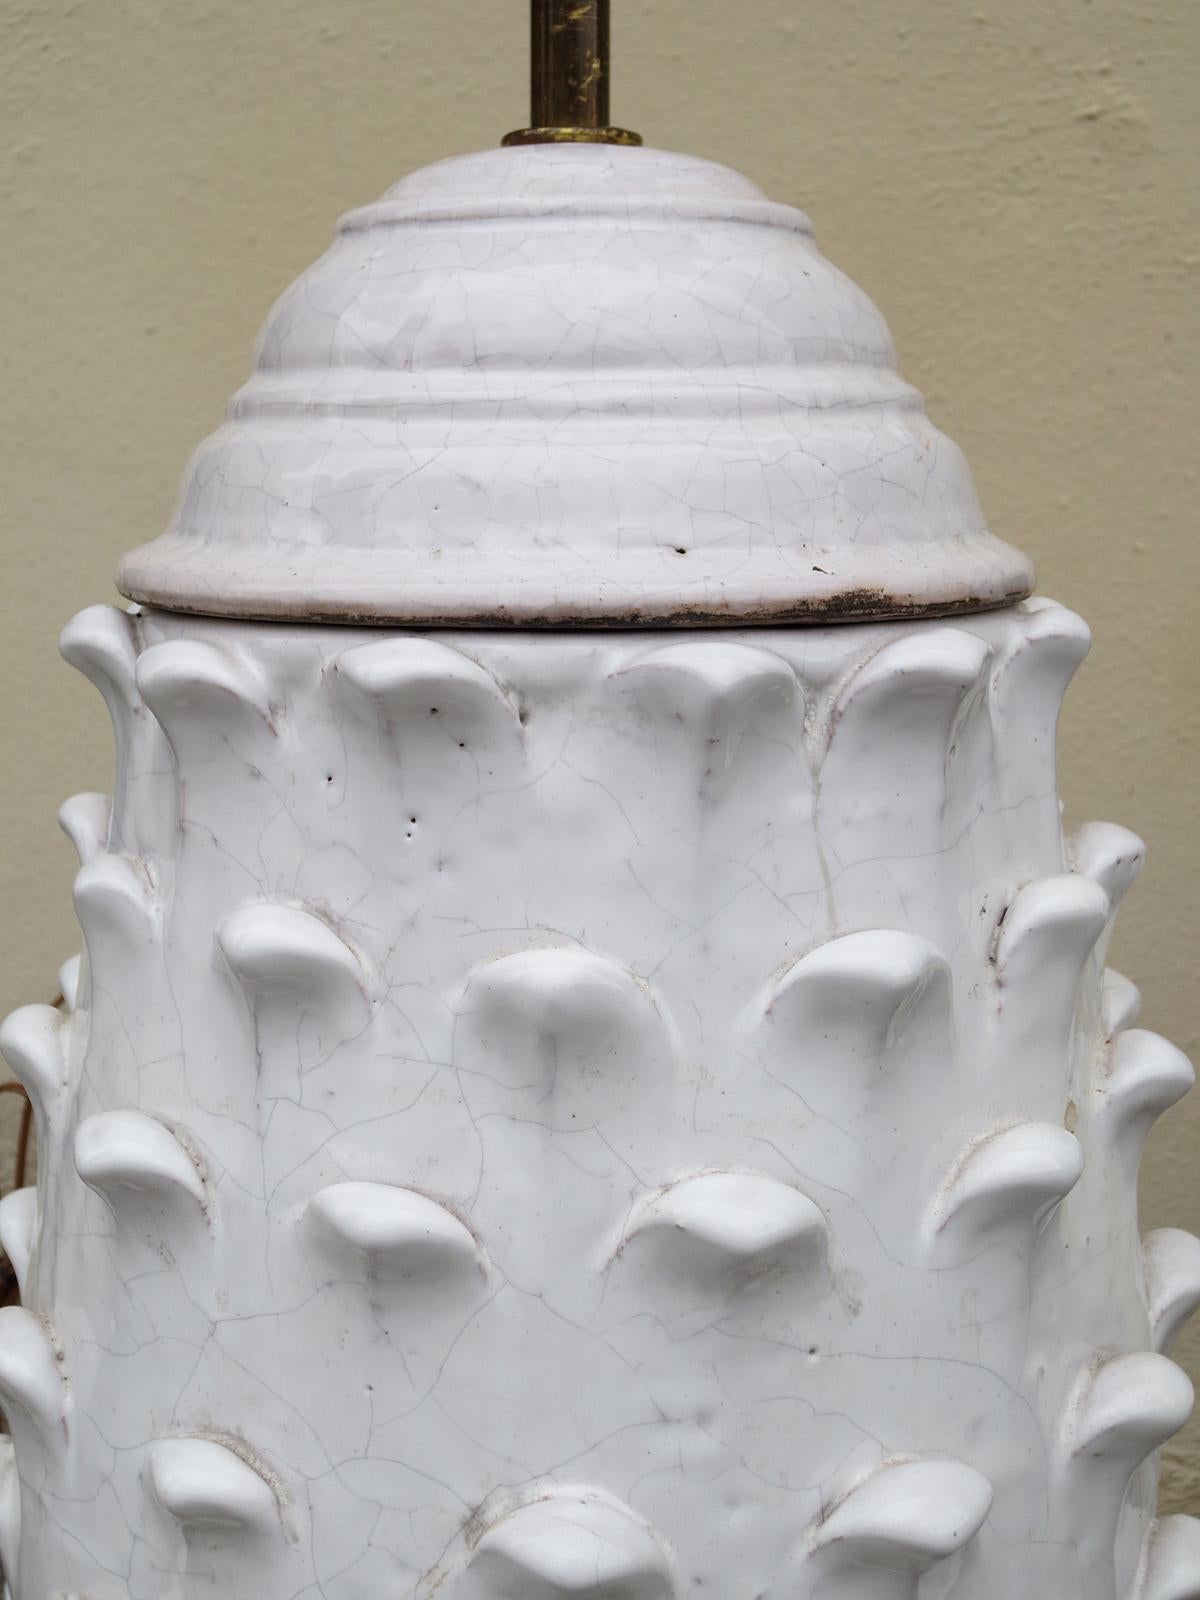 Mid-20th century Italian glazed pottery artichoke lamp
new wiring.